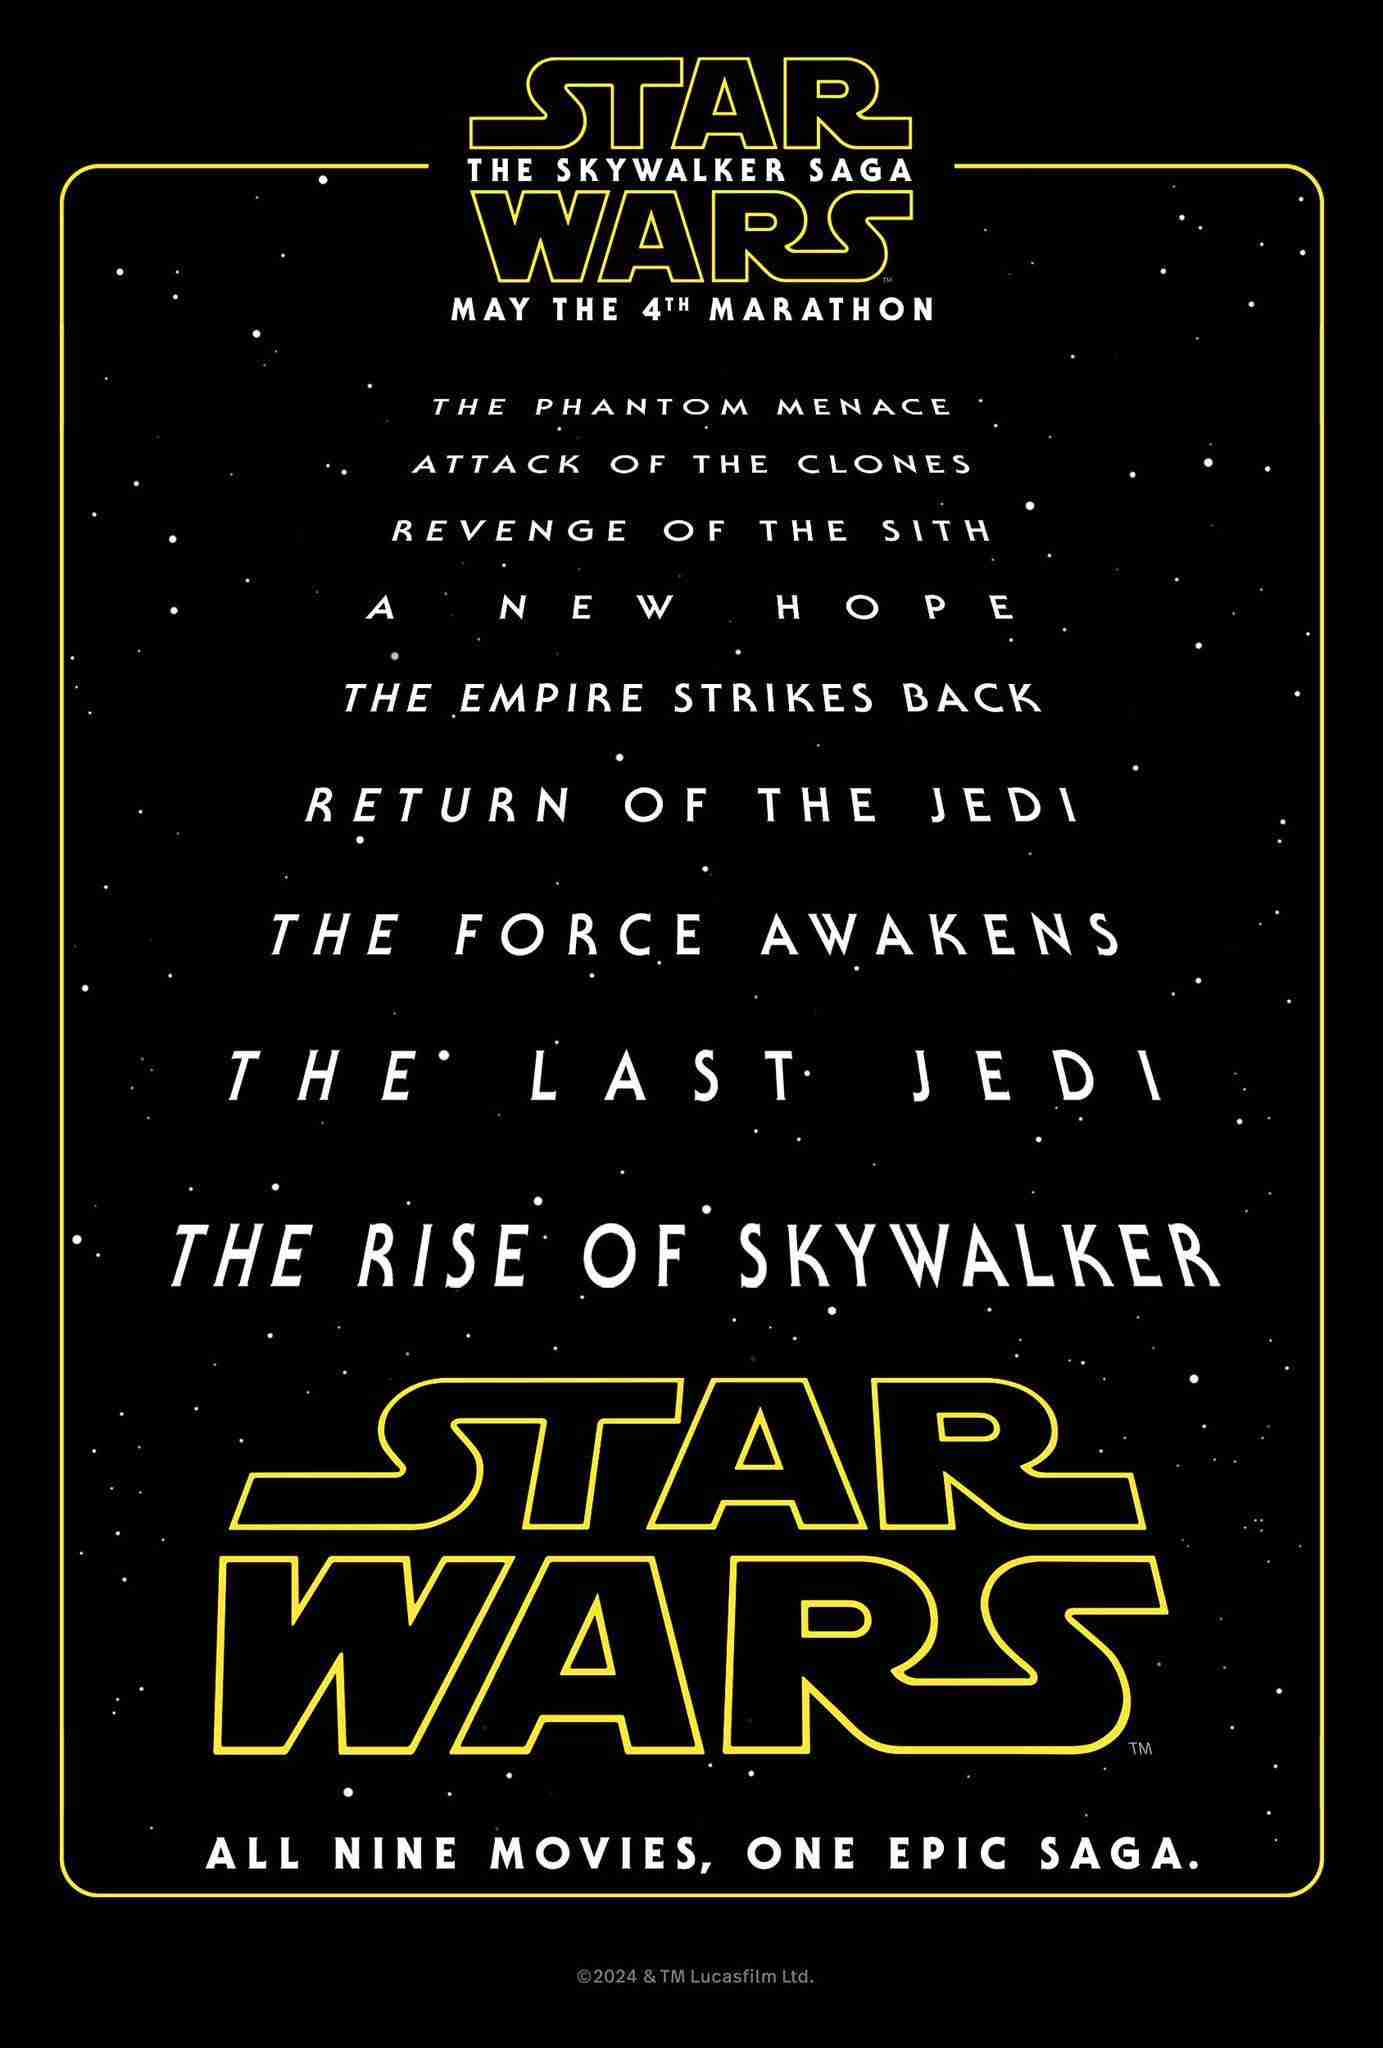 Official poster for the Skywalker Saga marathon re-release.